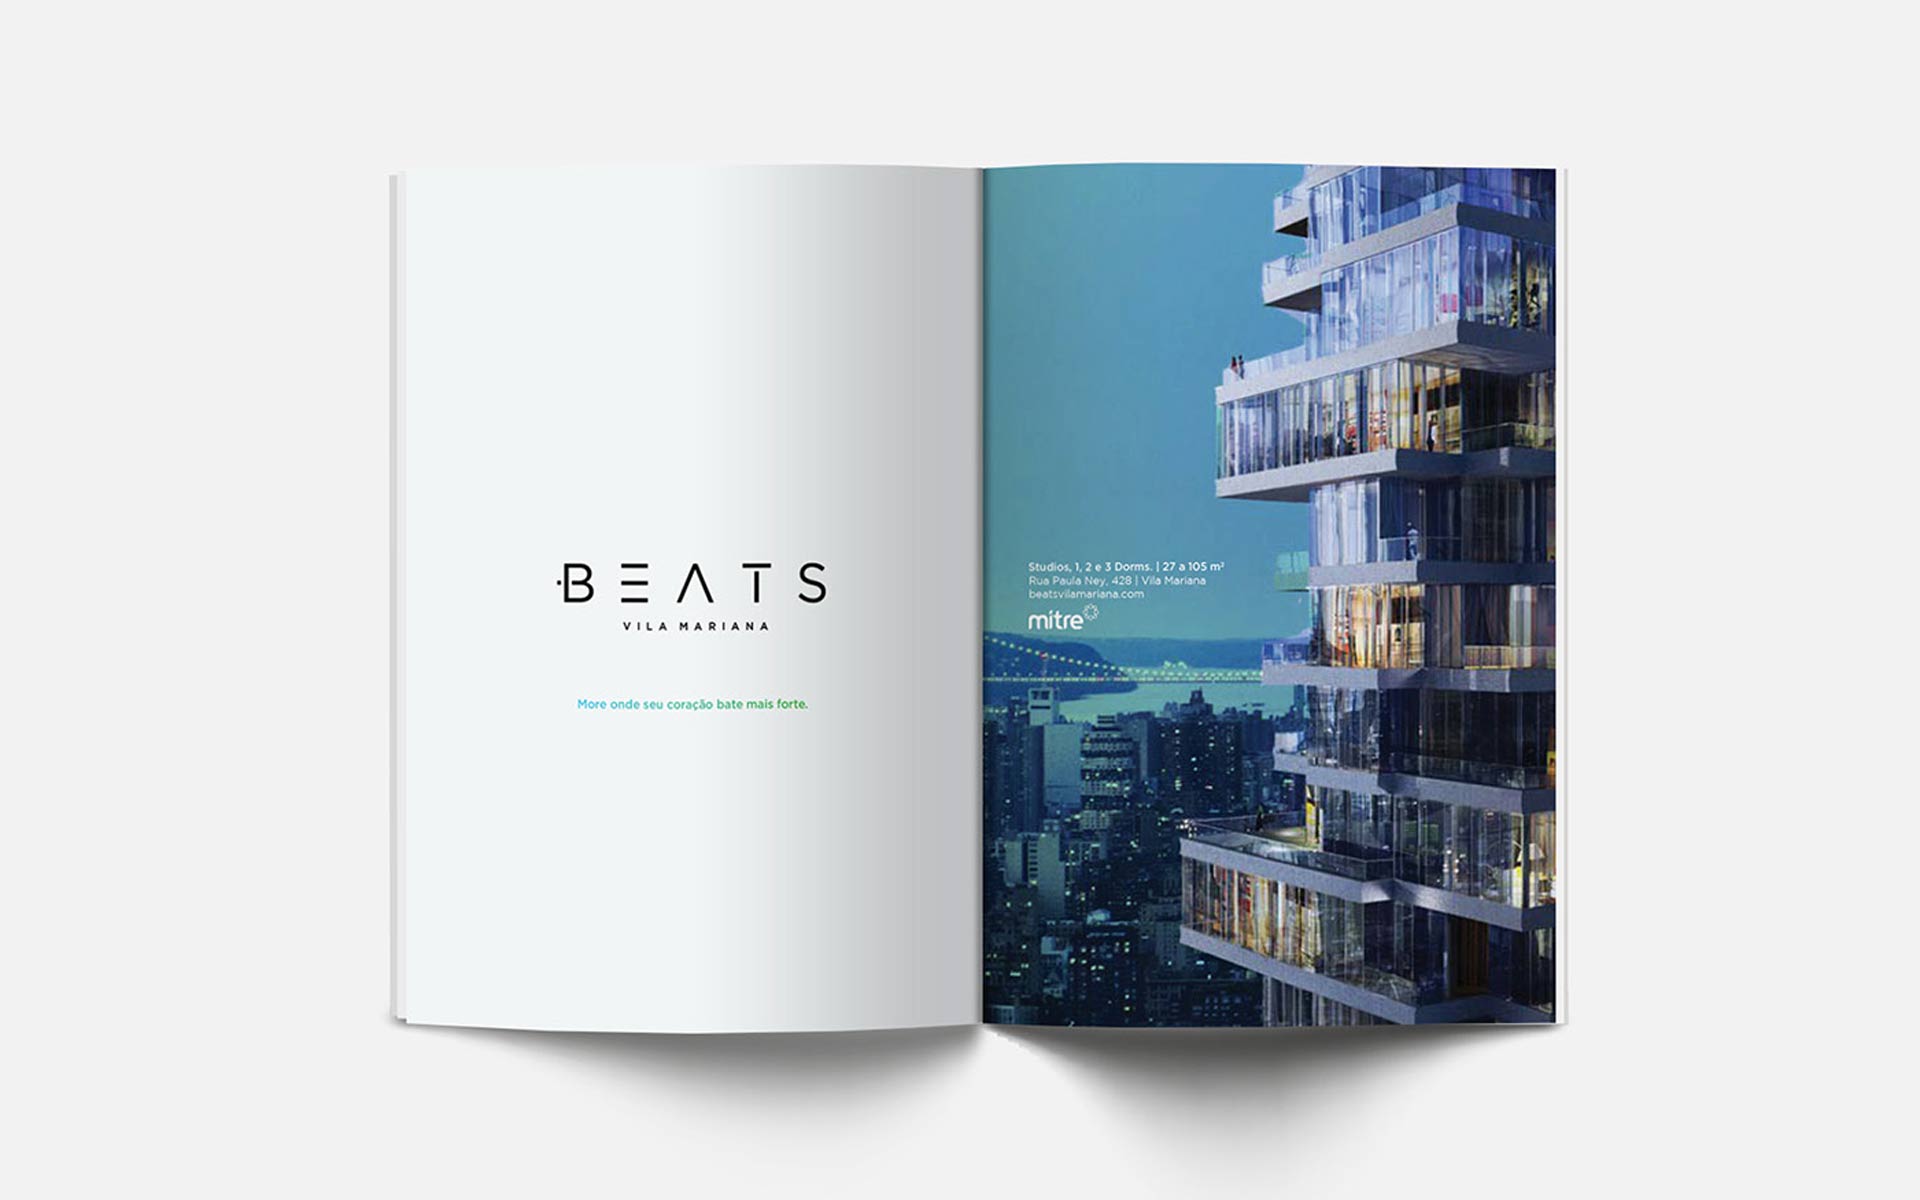 beats-anuncio1-ramonmaia-design-portfolio